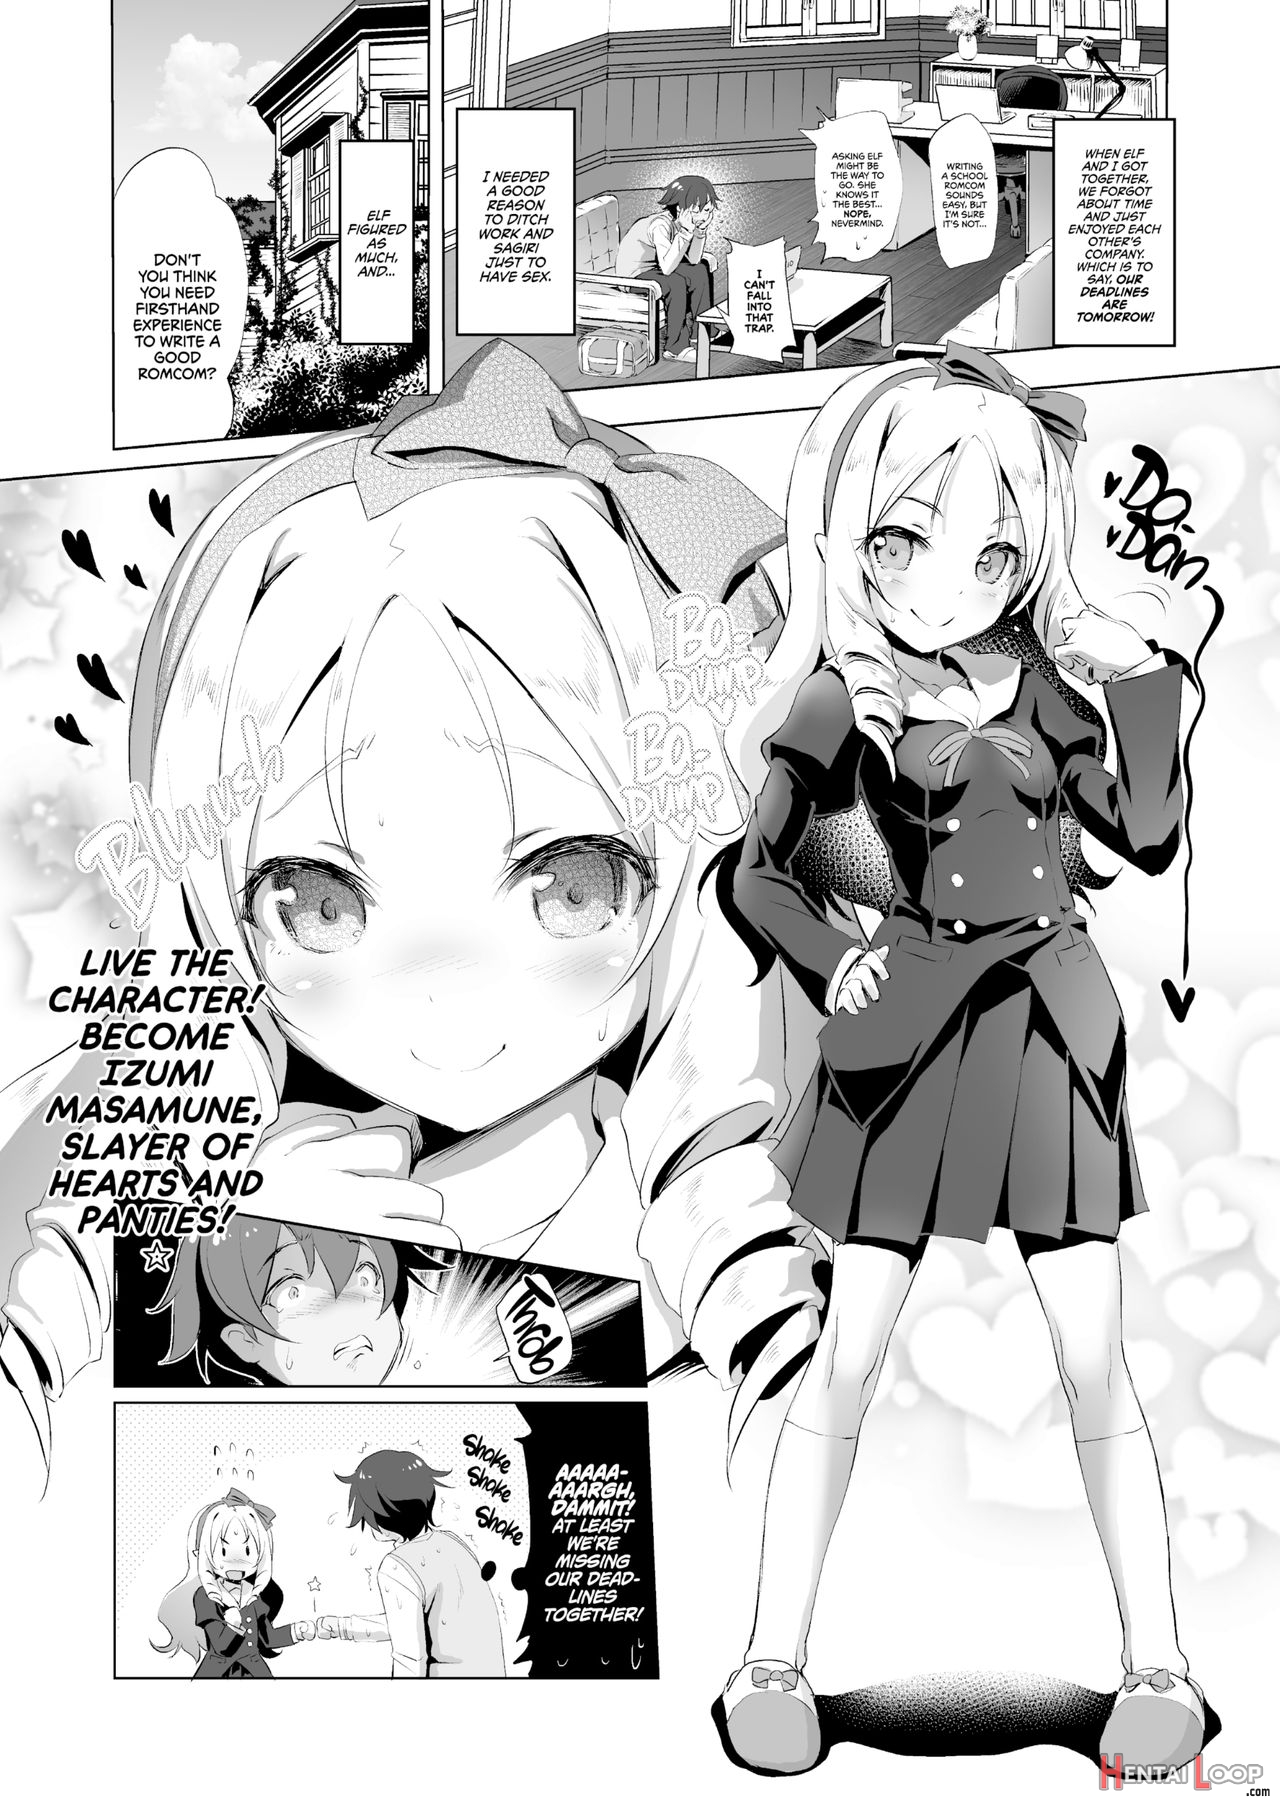 Elf Sensei's Eromanga page 3